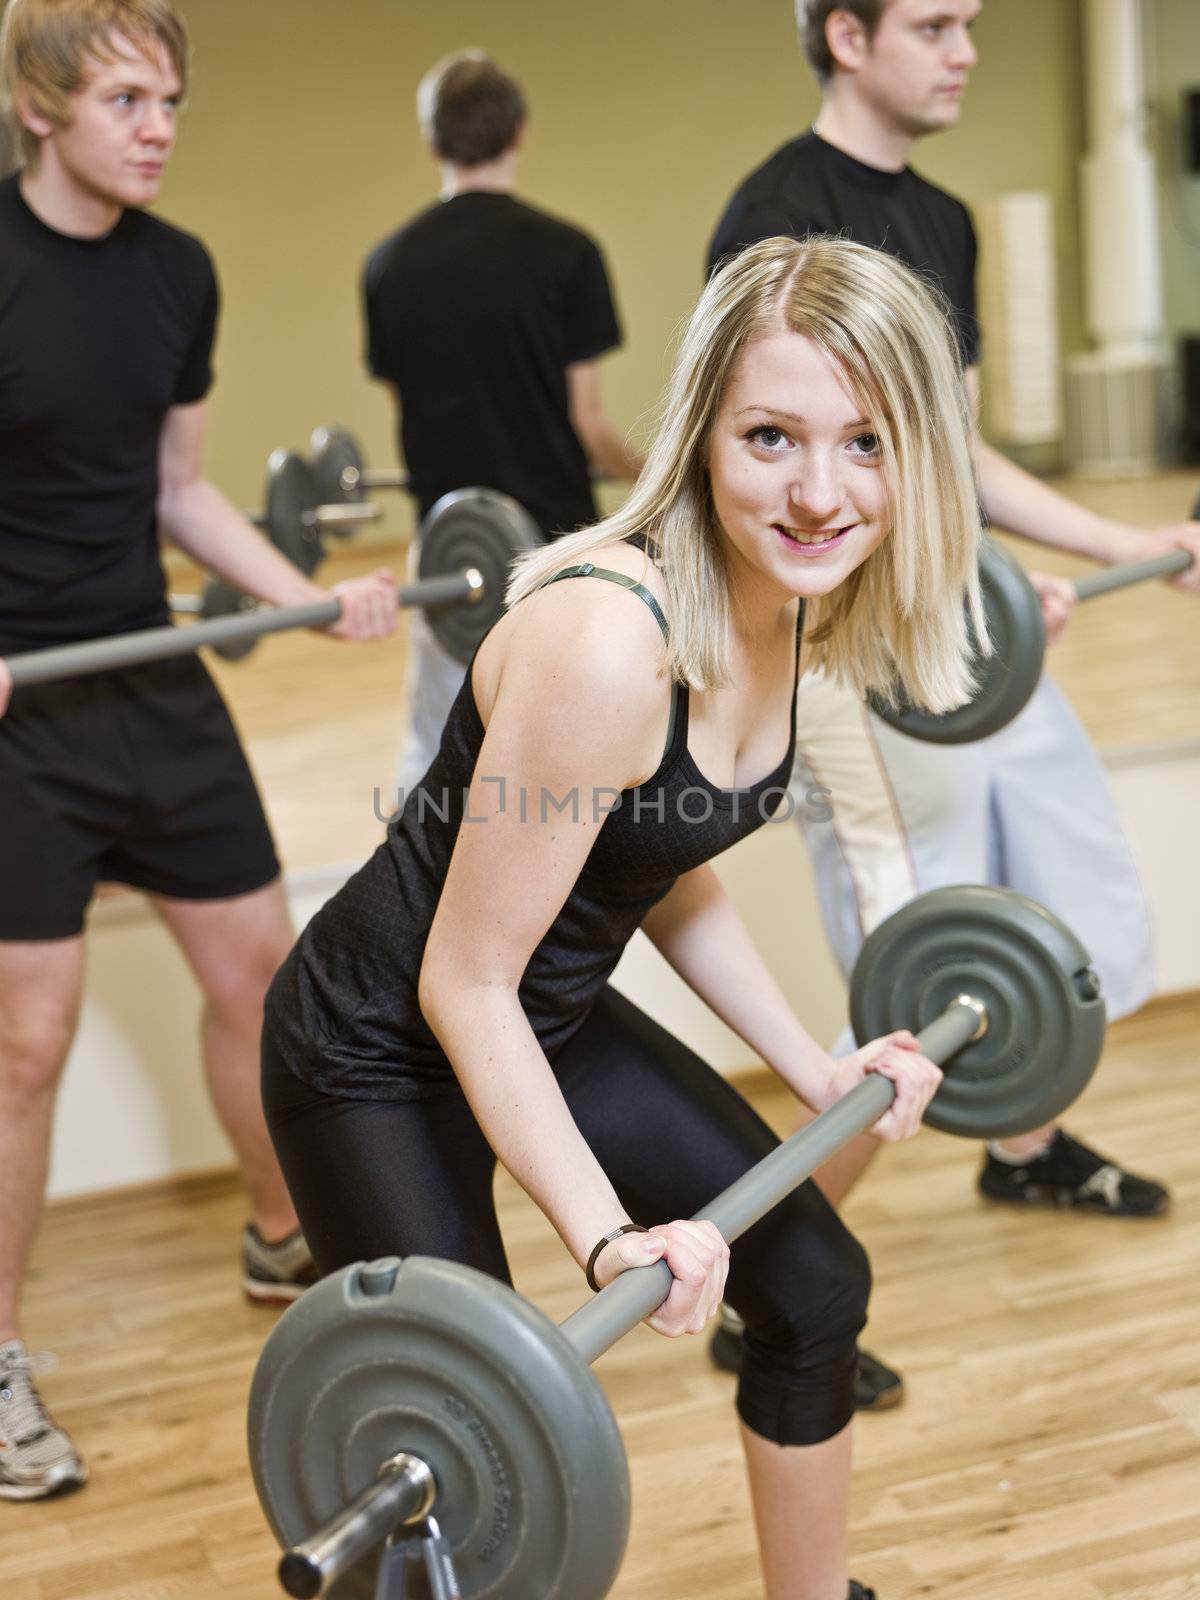 Girl lifting weights by gemenacom